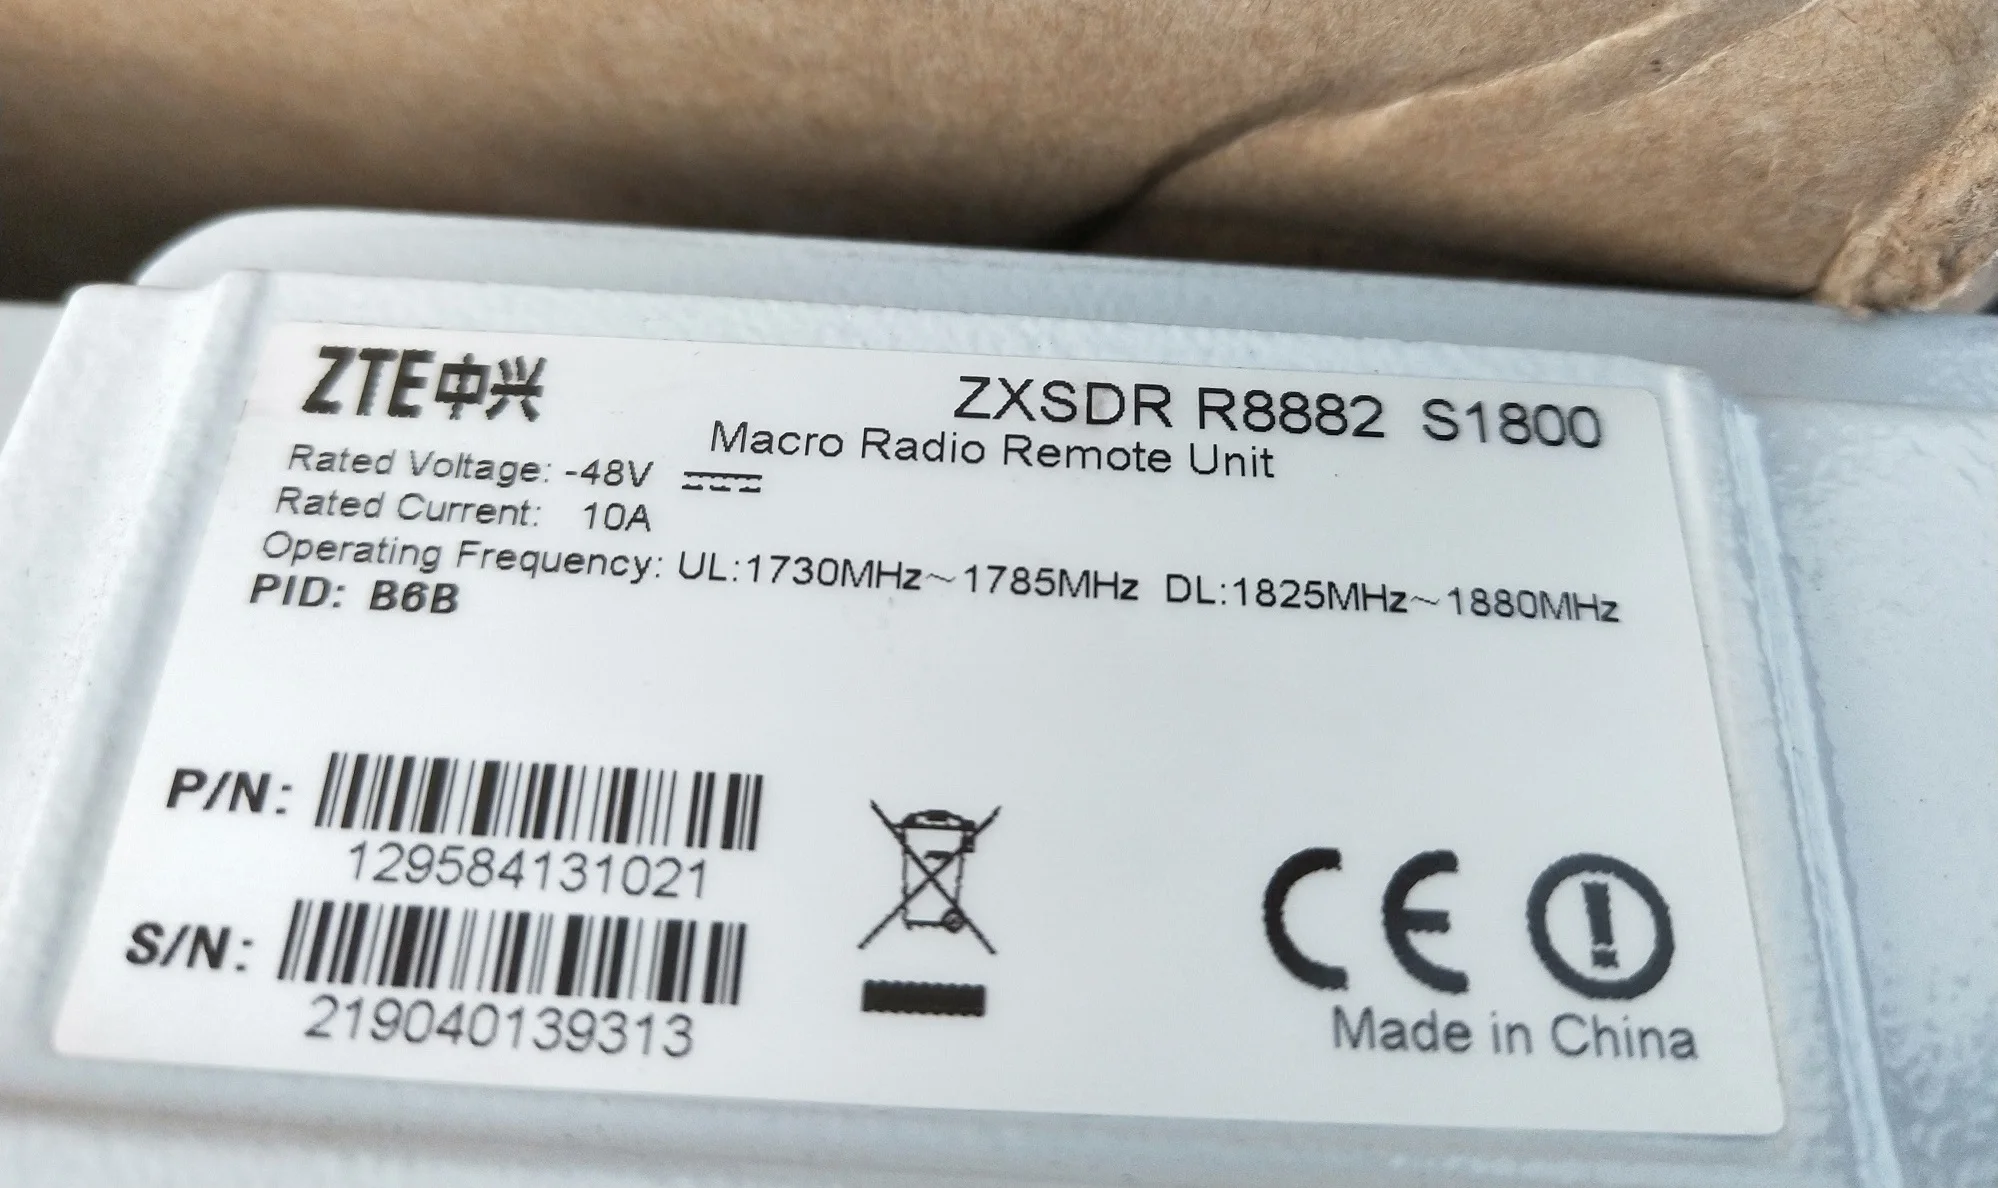 ZTE ZXSDR RRU R8882 S9000 B6C| Alibaba.com